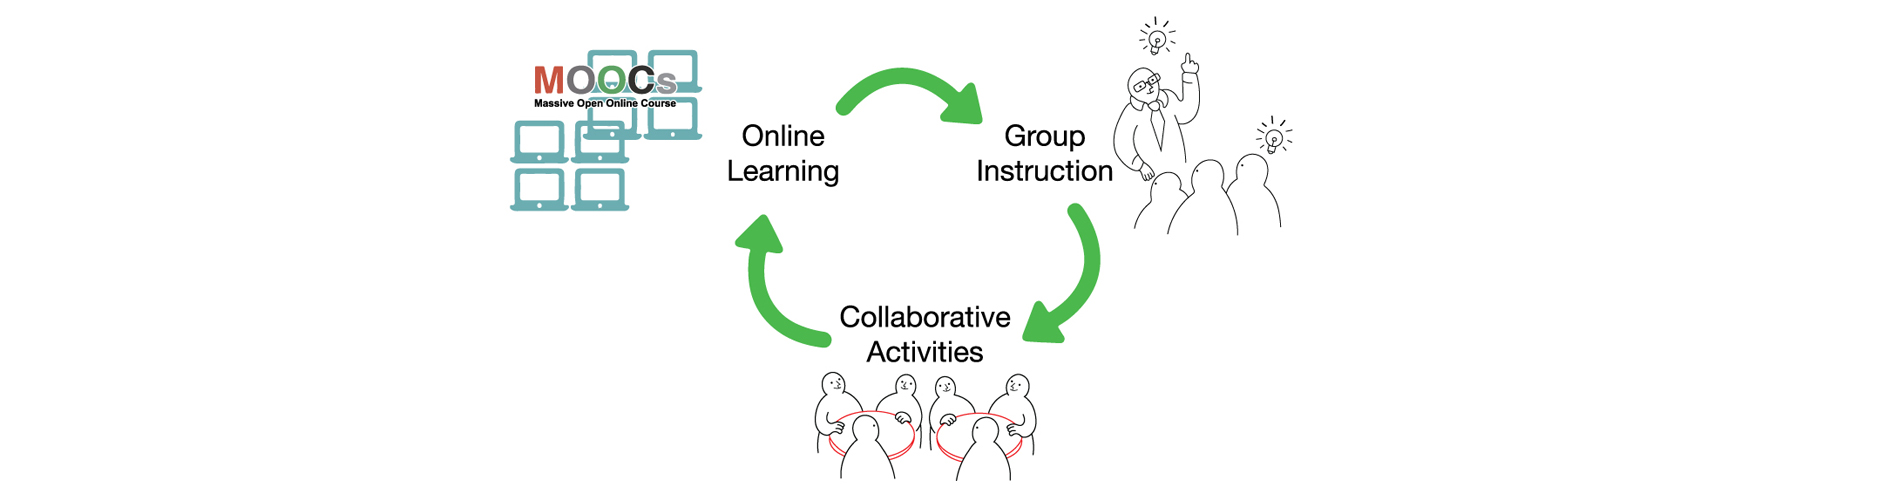 MOOC online learning activities